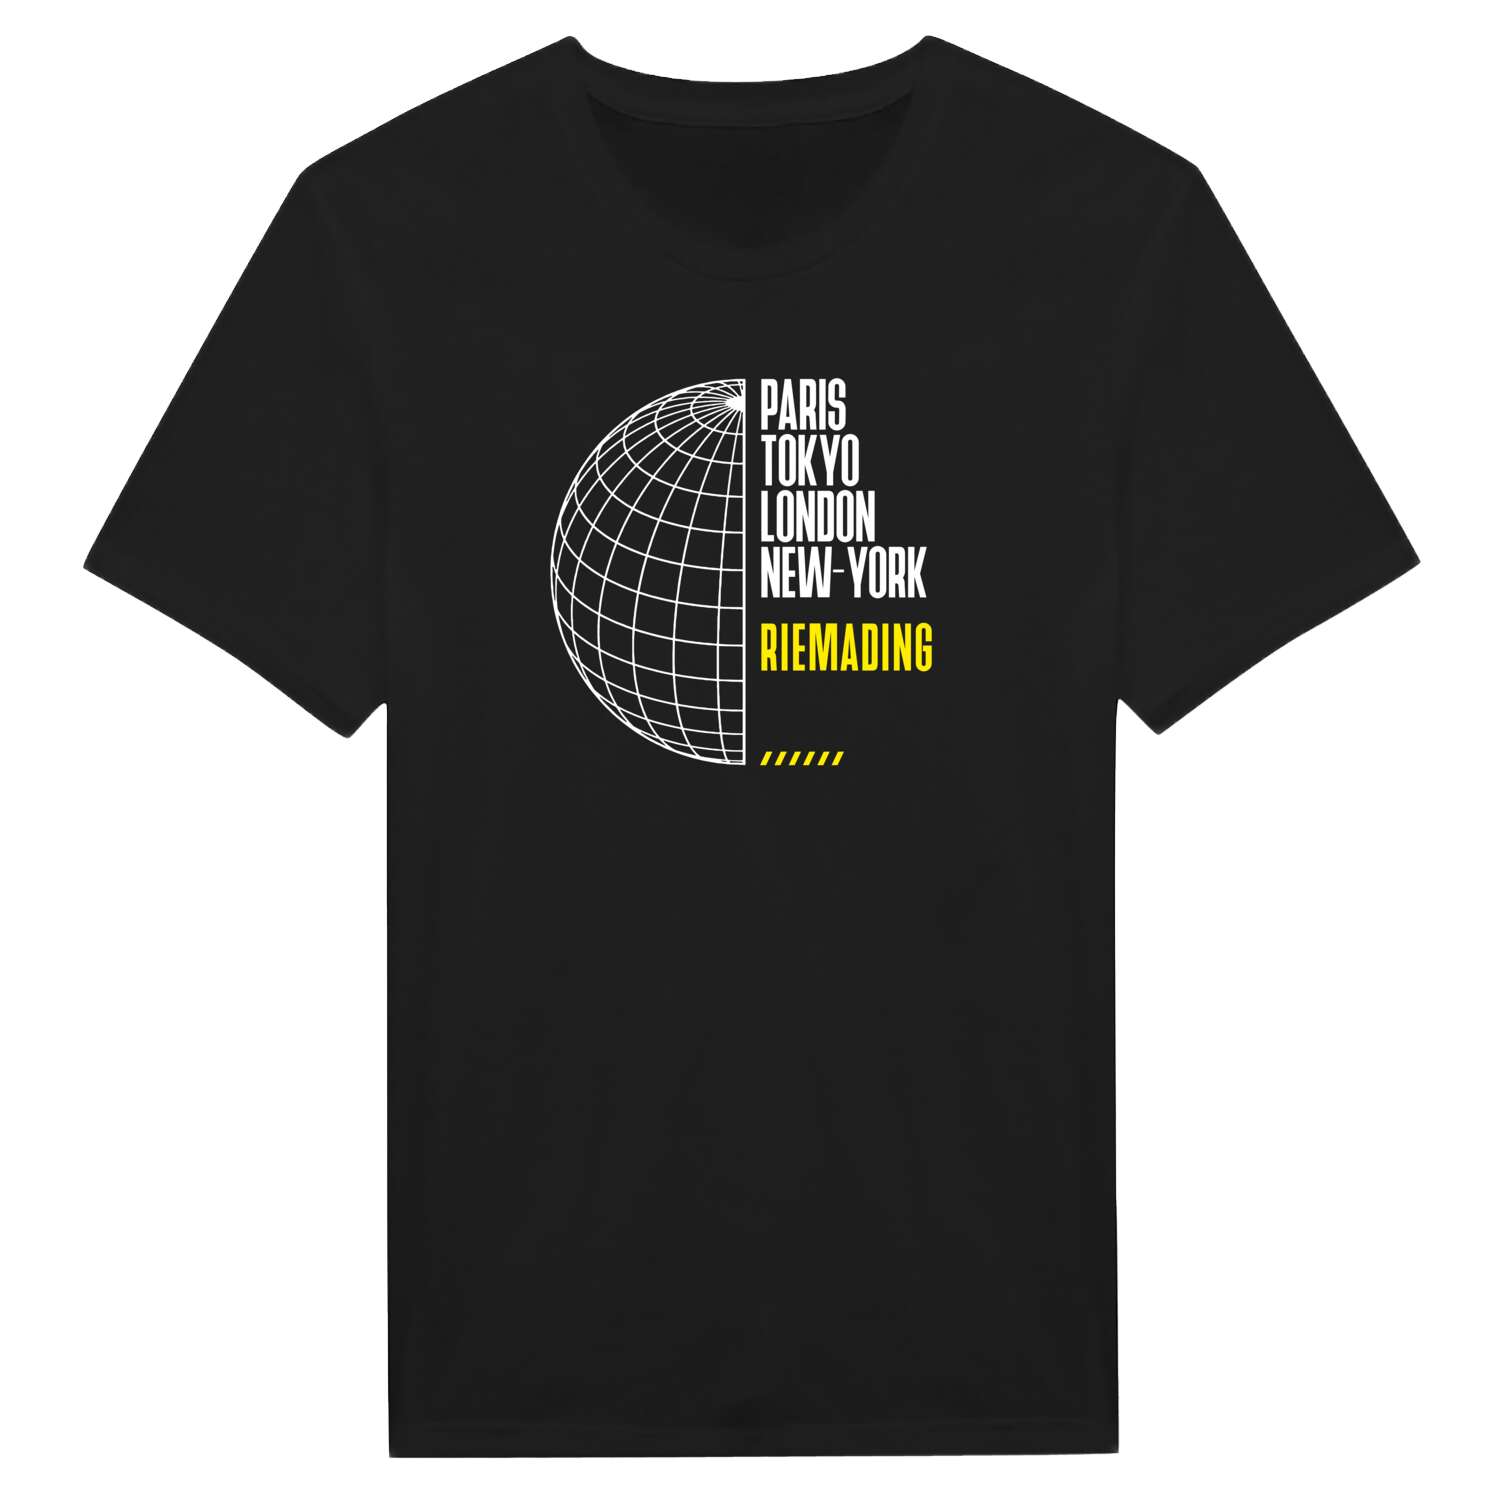 Riemading T-Shirt »Paris Tokyo London«